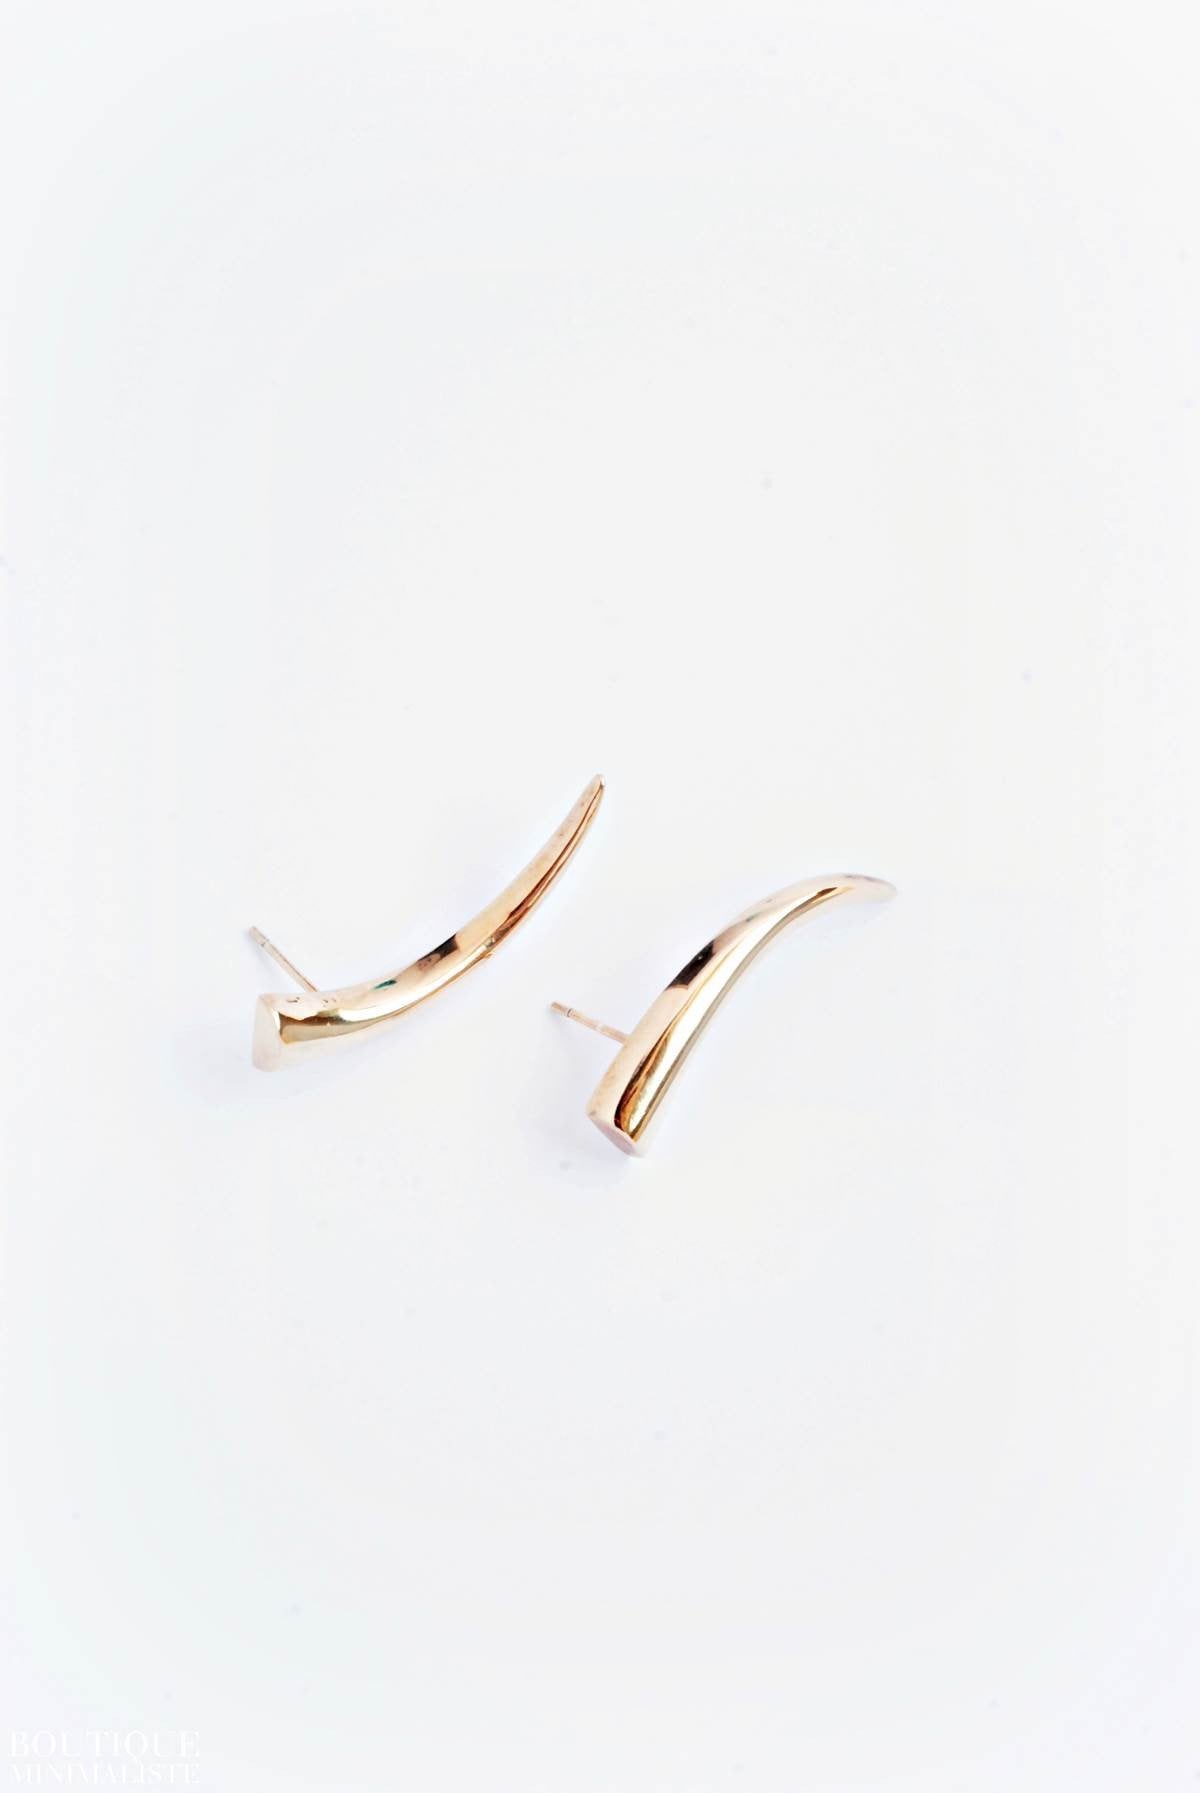 Tusk Earrings - Boutique Minimaliste has waterproof, durable, elegant and vintage inspired jewelry